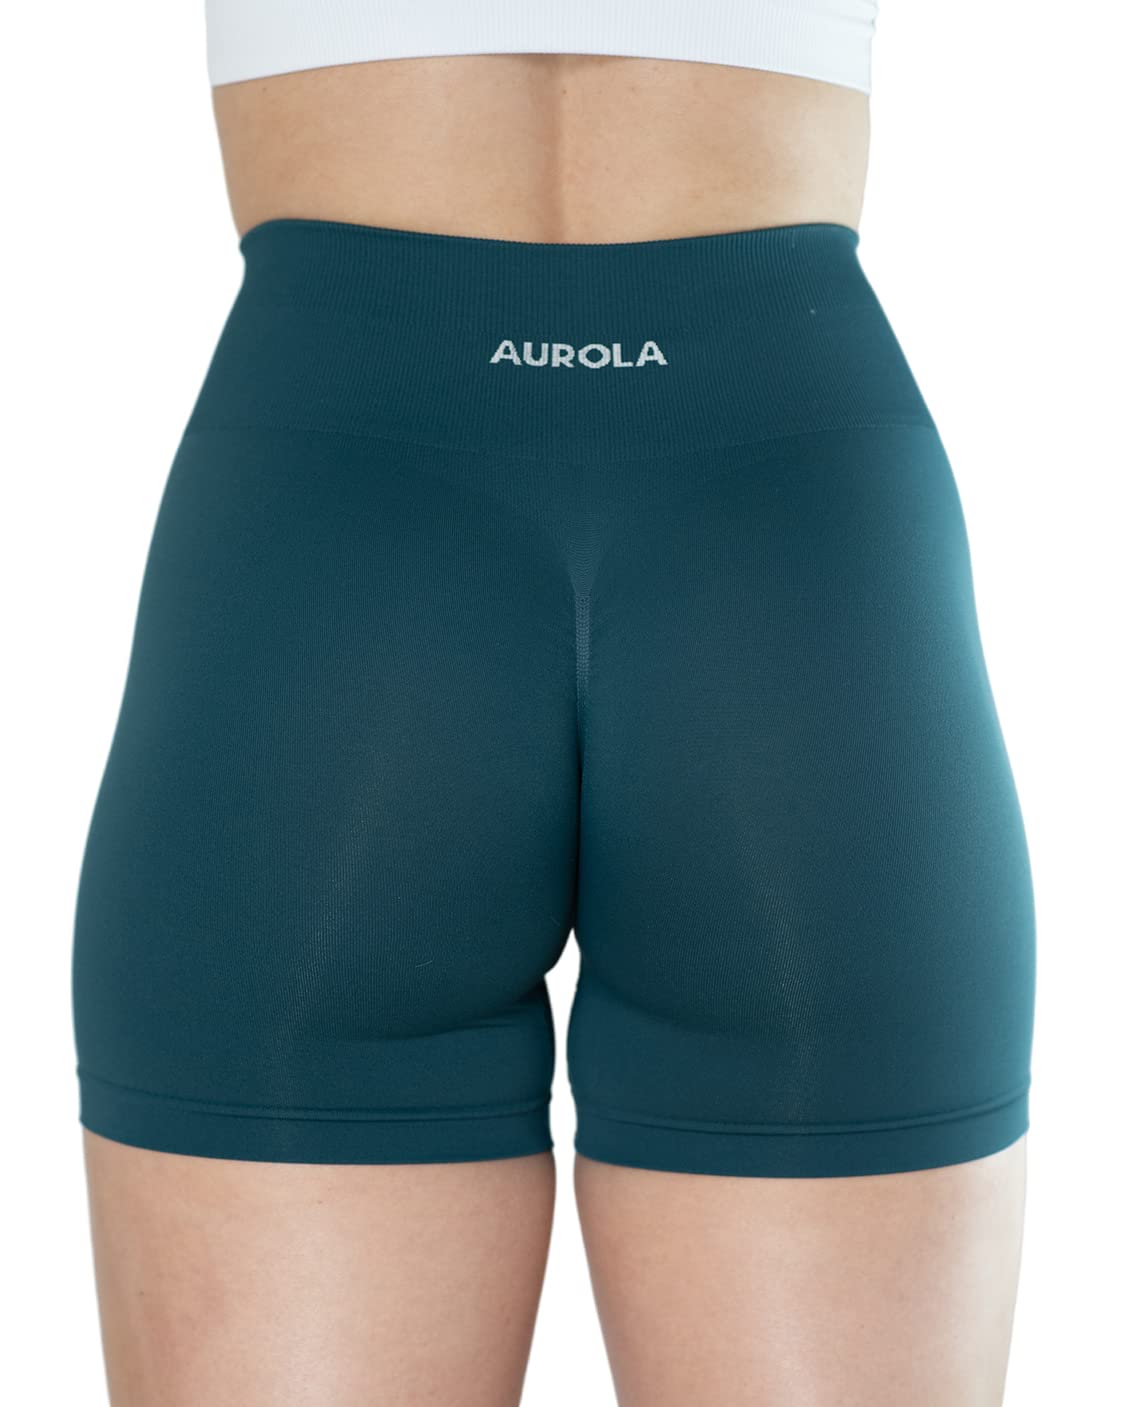 Buy AUROLA Dream Collection Workout Shorts for Women High Waist